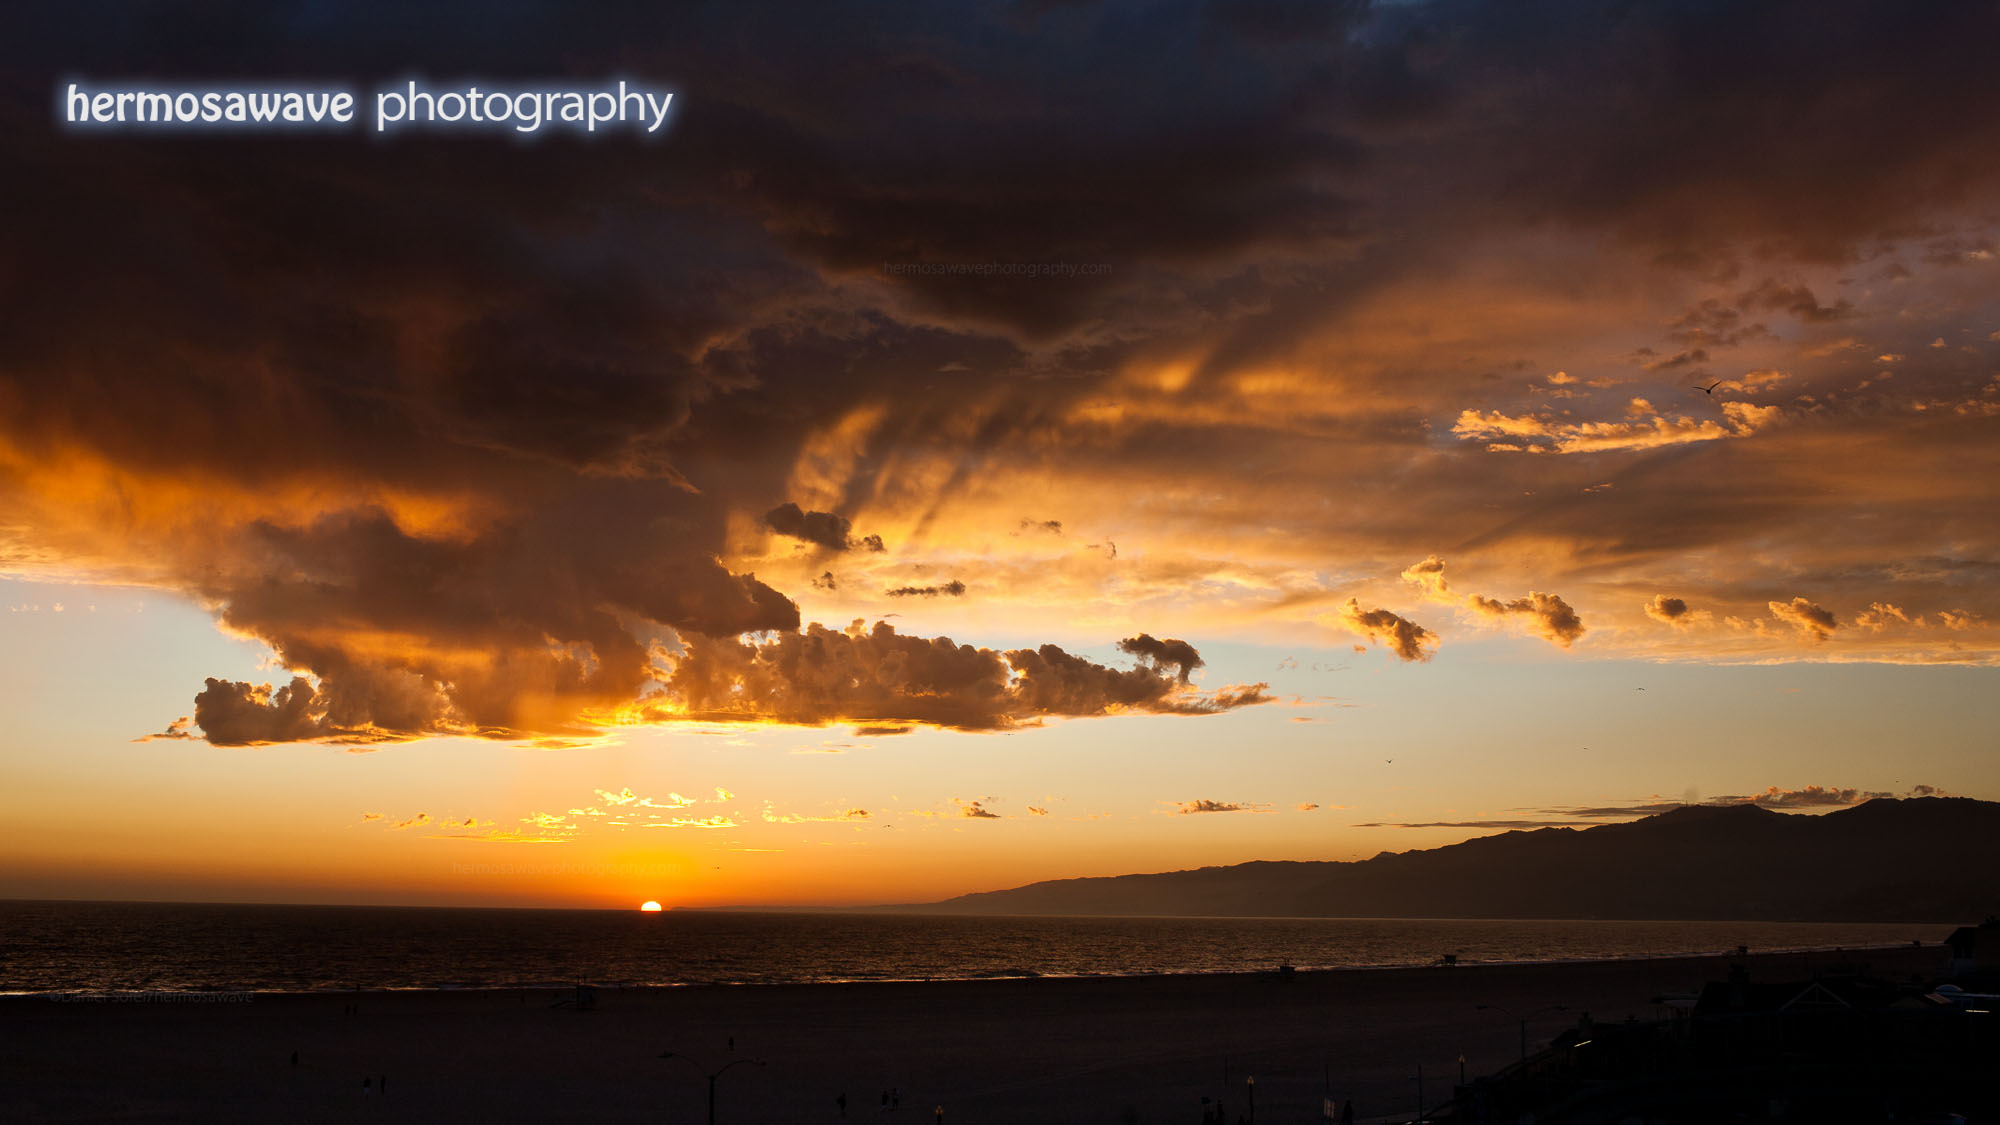 Sunset on Santa Monica Bay